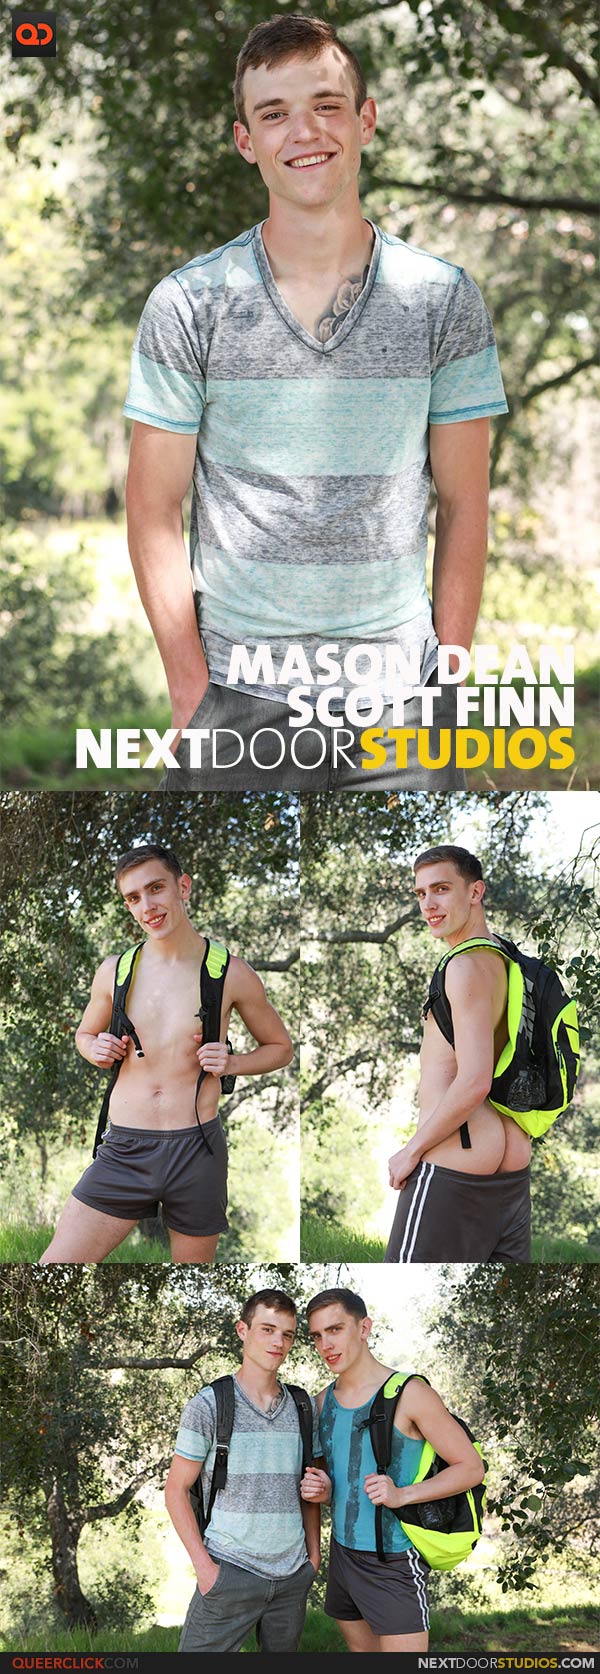 NextDoorStudios: Scott Finn and Mason Dean